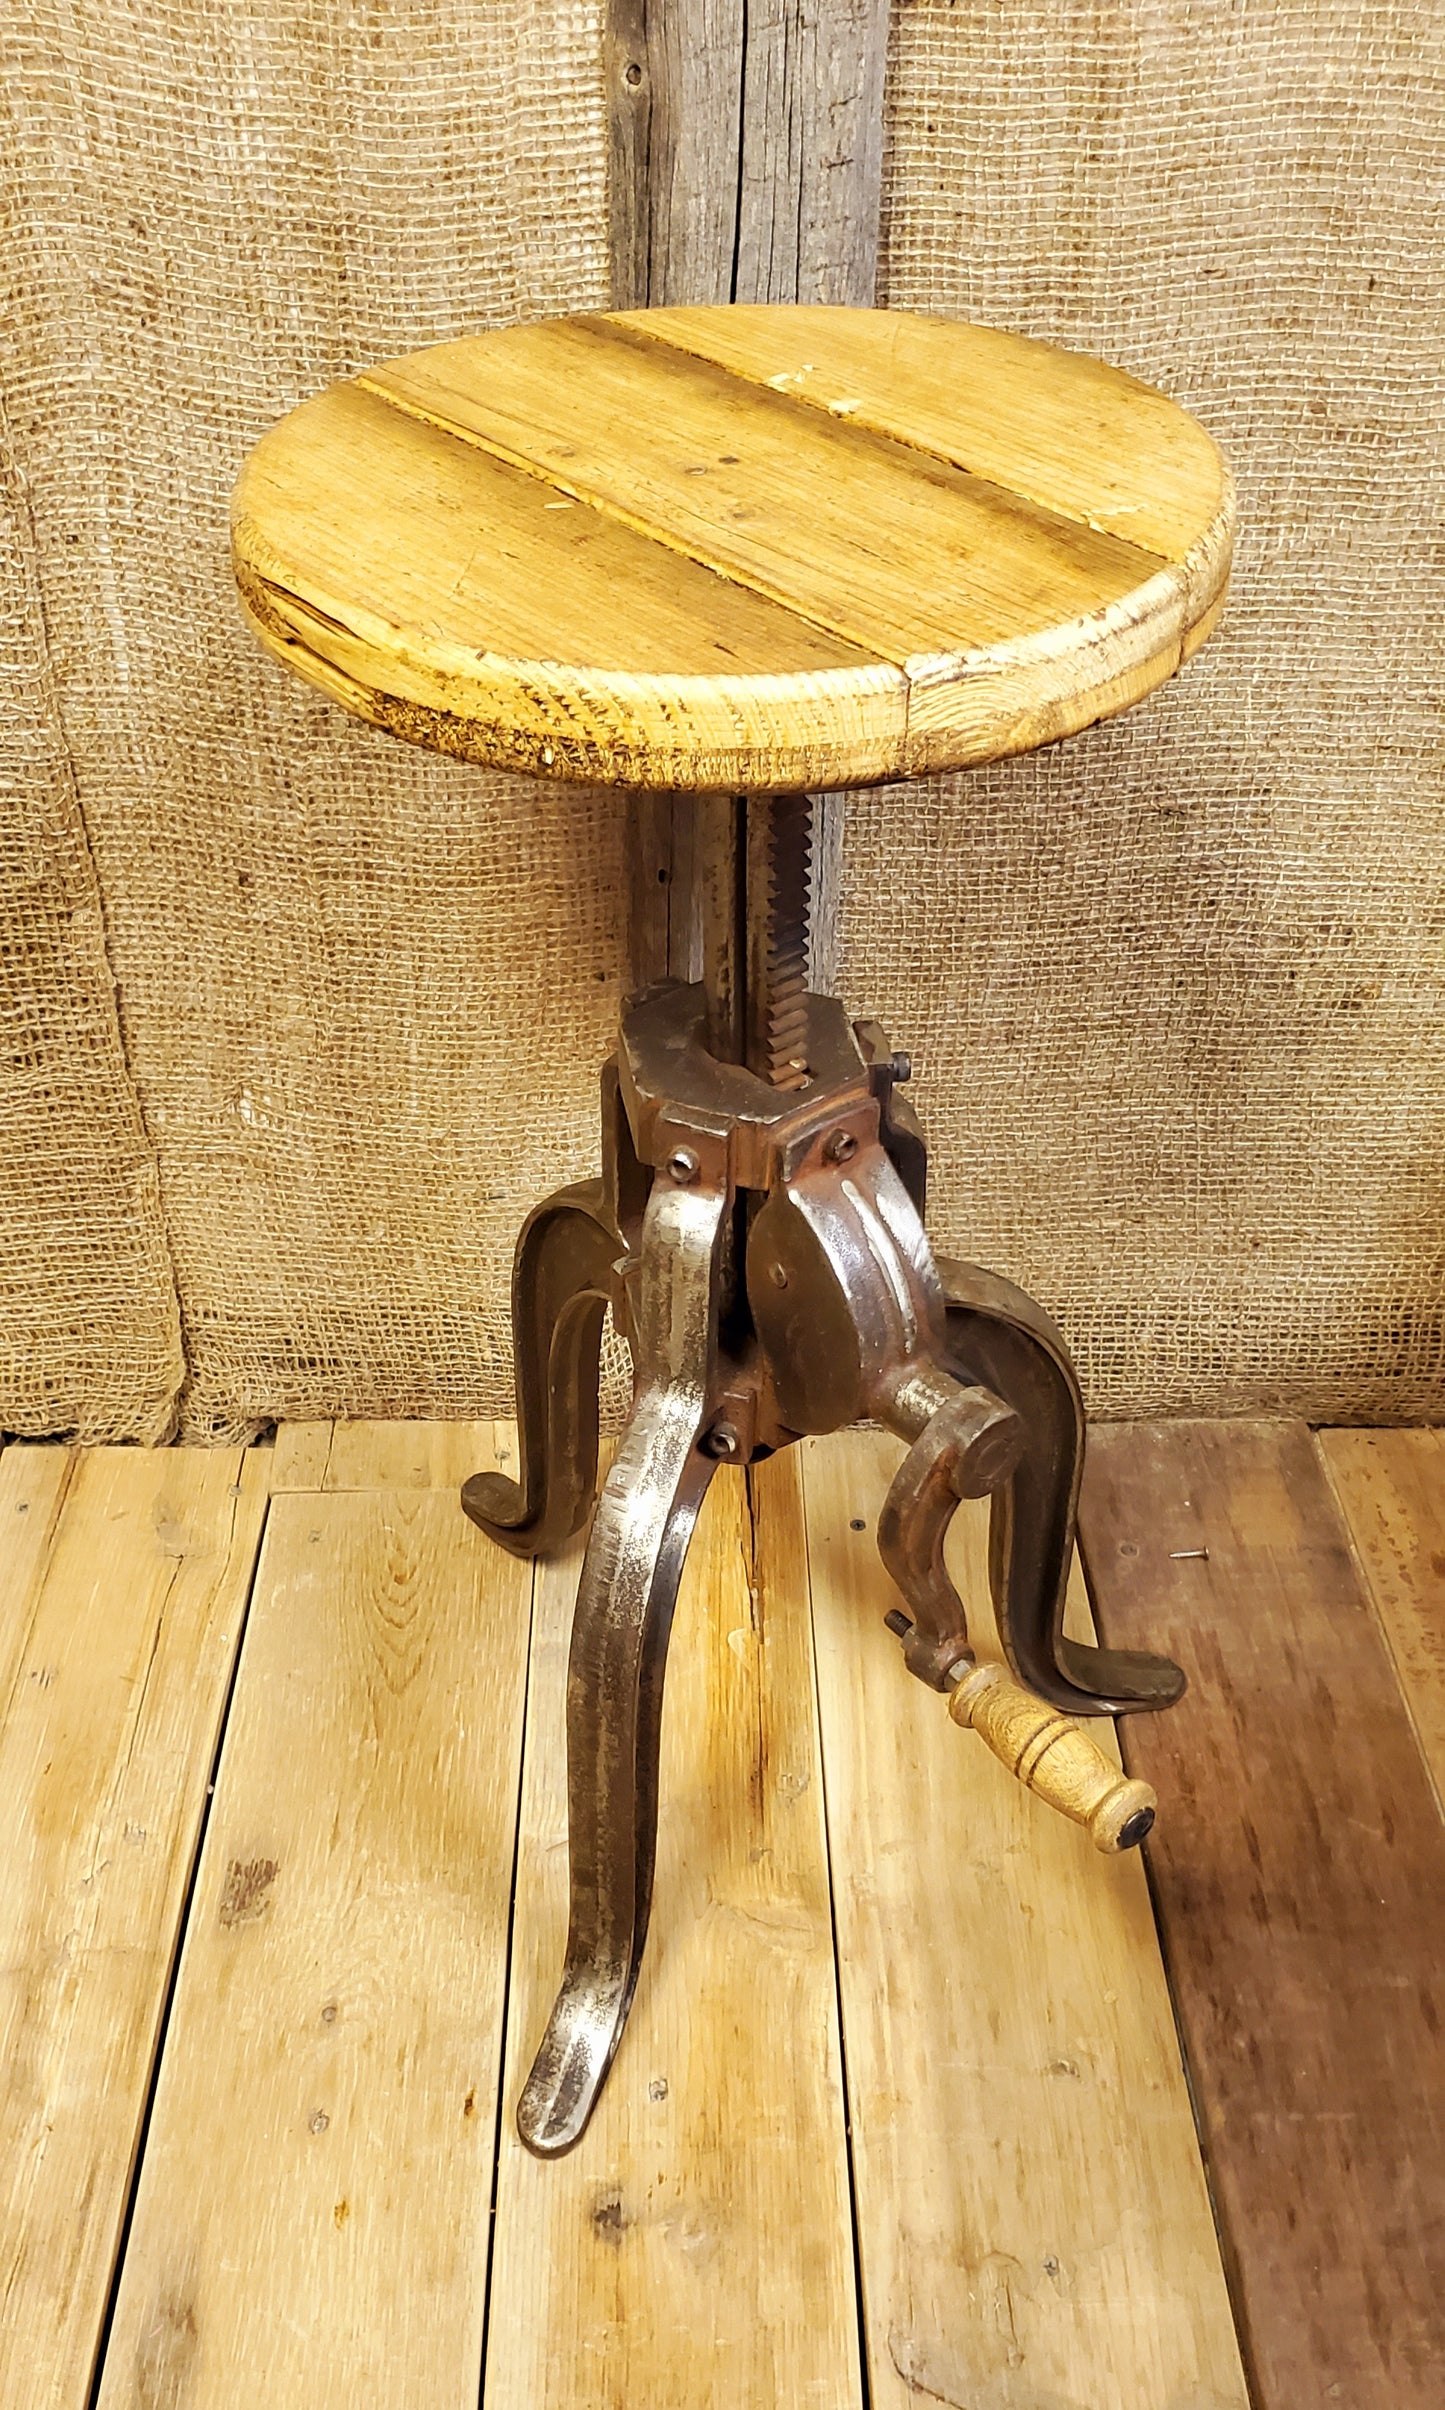 The 'Jarrat Stool' - Vintage Cast Iron Crank Handle Stool With Reclaimed Wood Top - Spearhead Collection - Stools - Adjustable Height Stool, crank handle stool, Industrial stool, Seating, vin